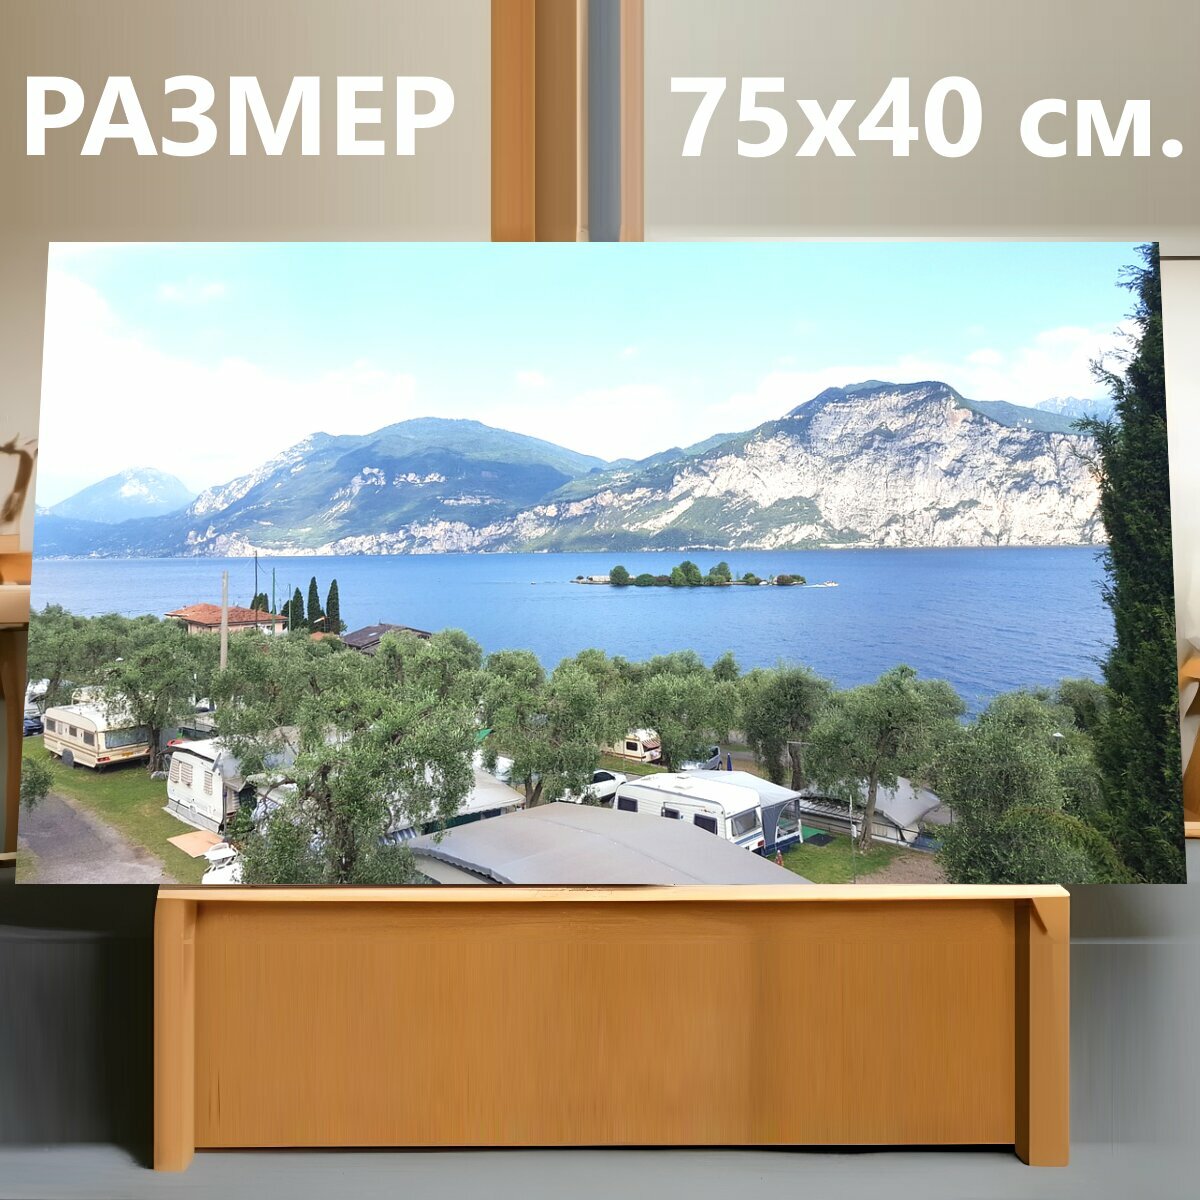 Картина на холсте "Лаго ди гарда, италия, гарда" на подрамнике 75х40 см. для интерьера